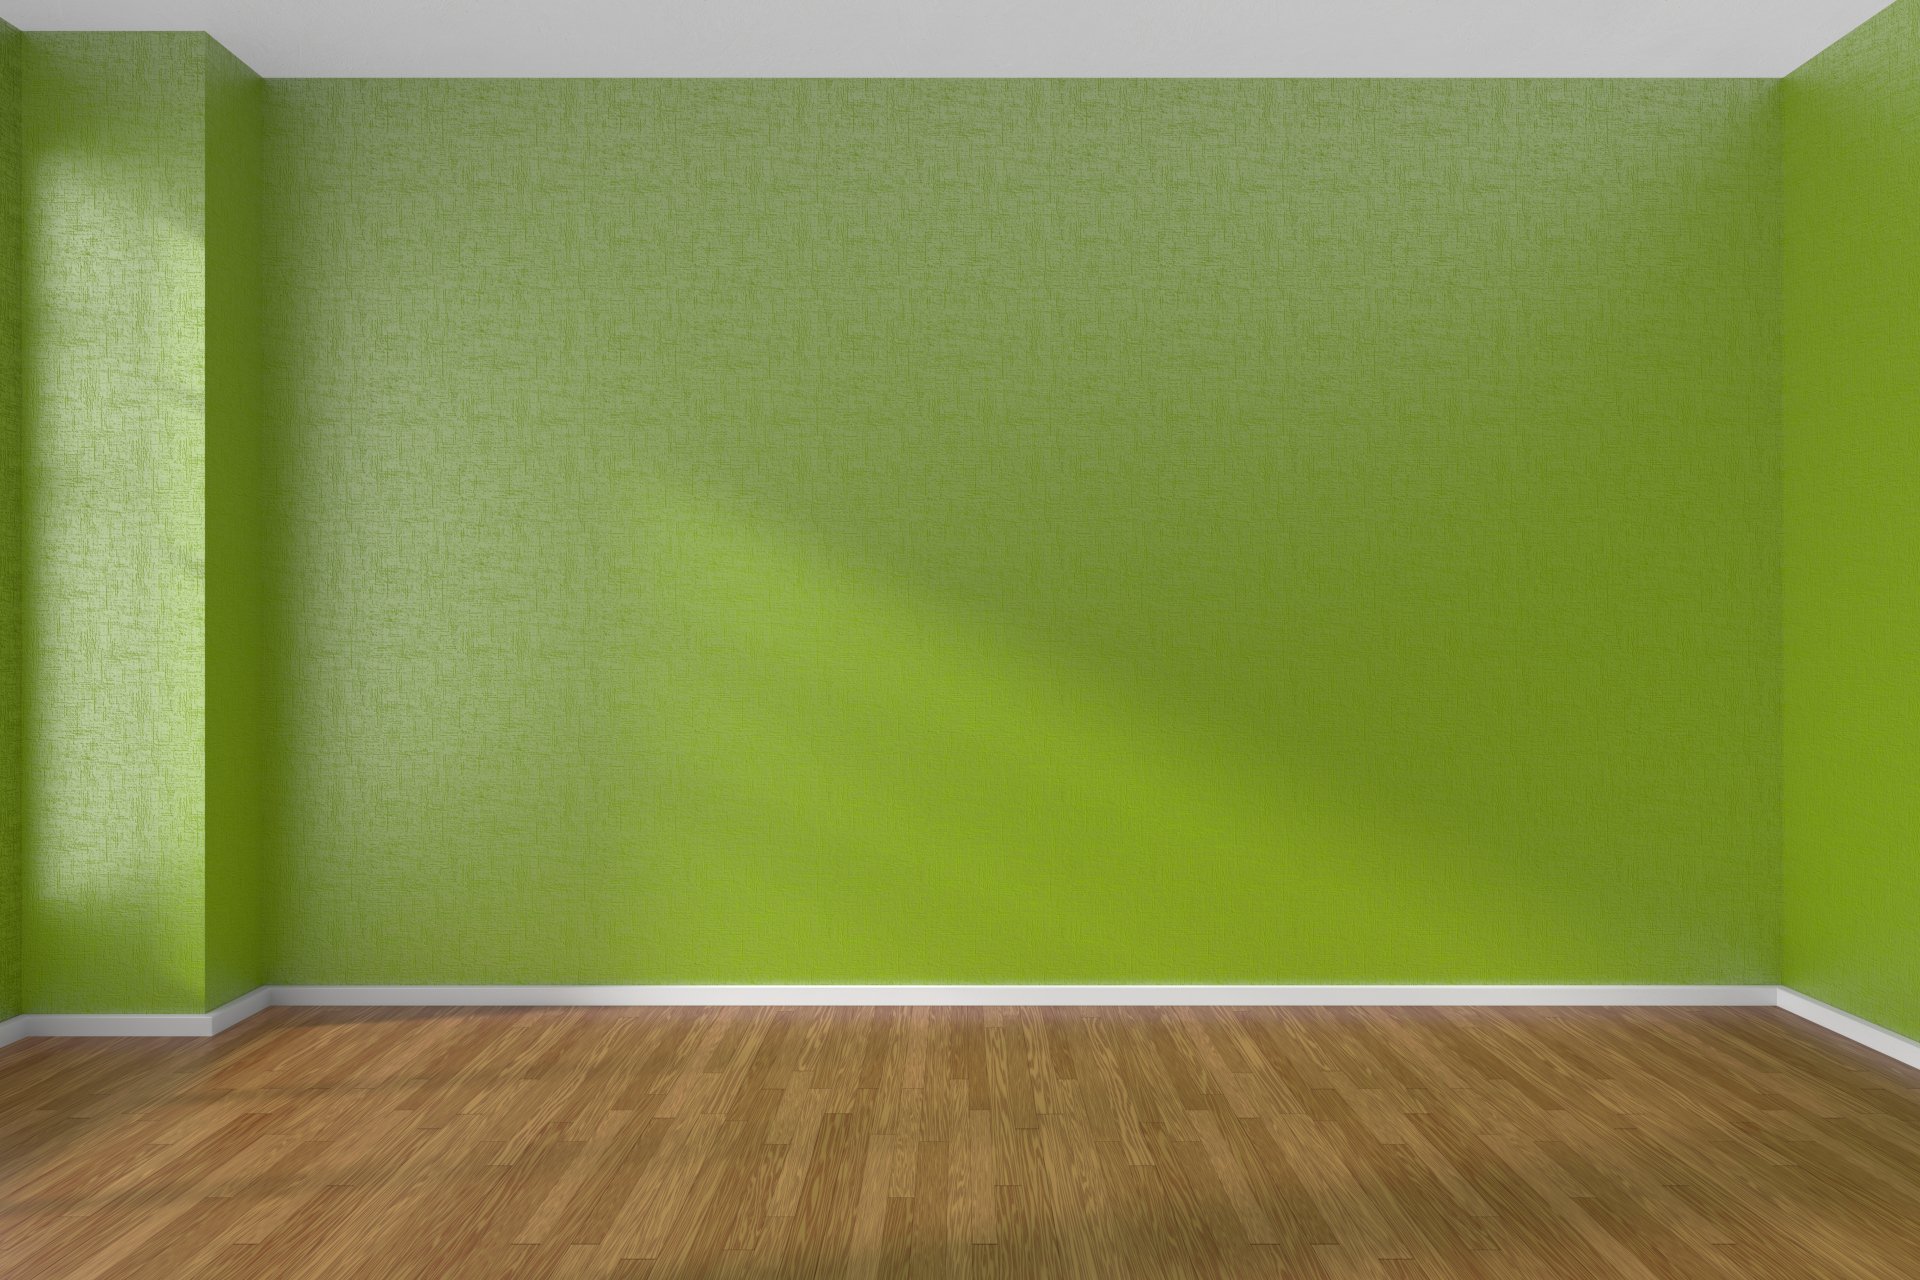 Пустая комната с зелеными стенами